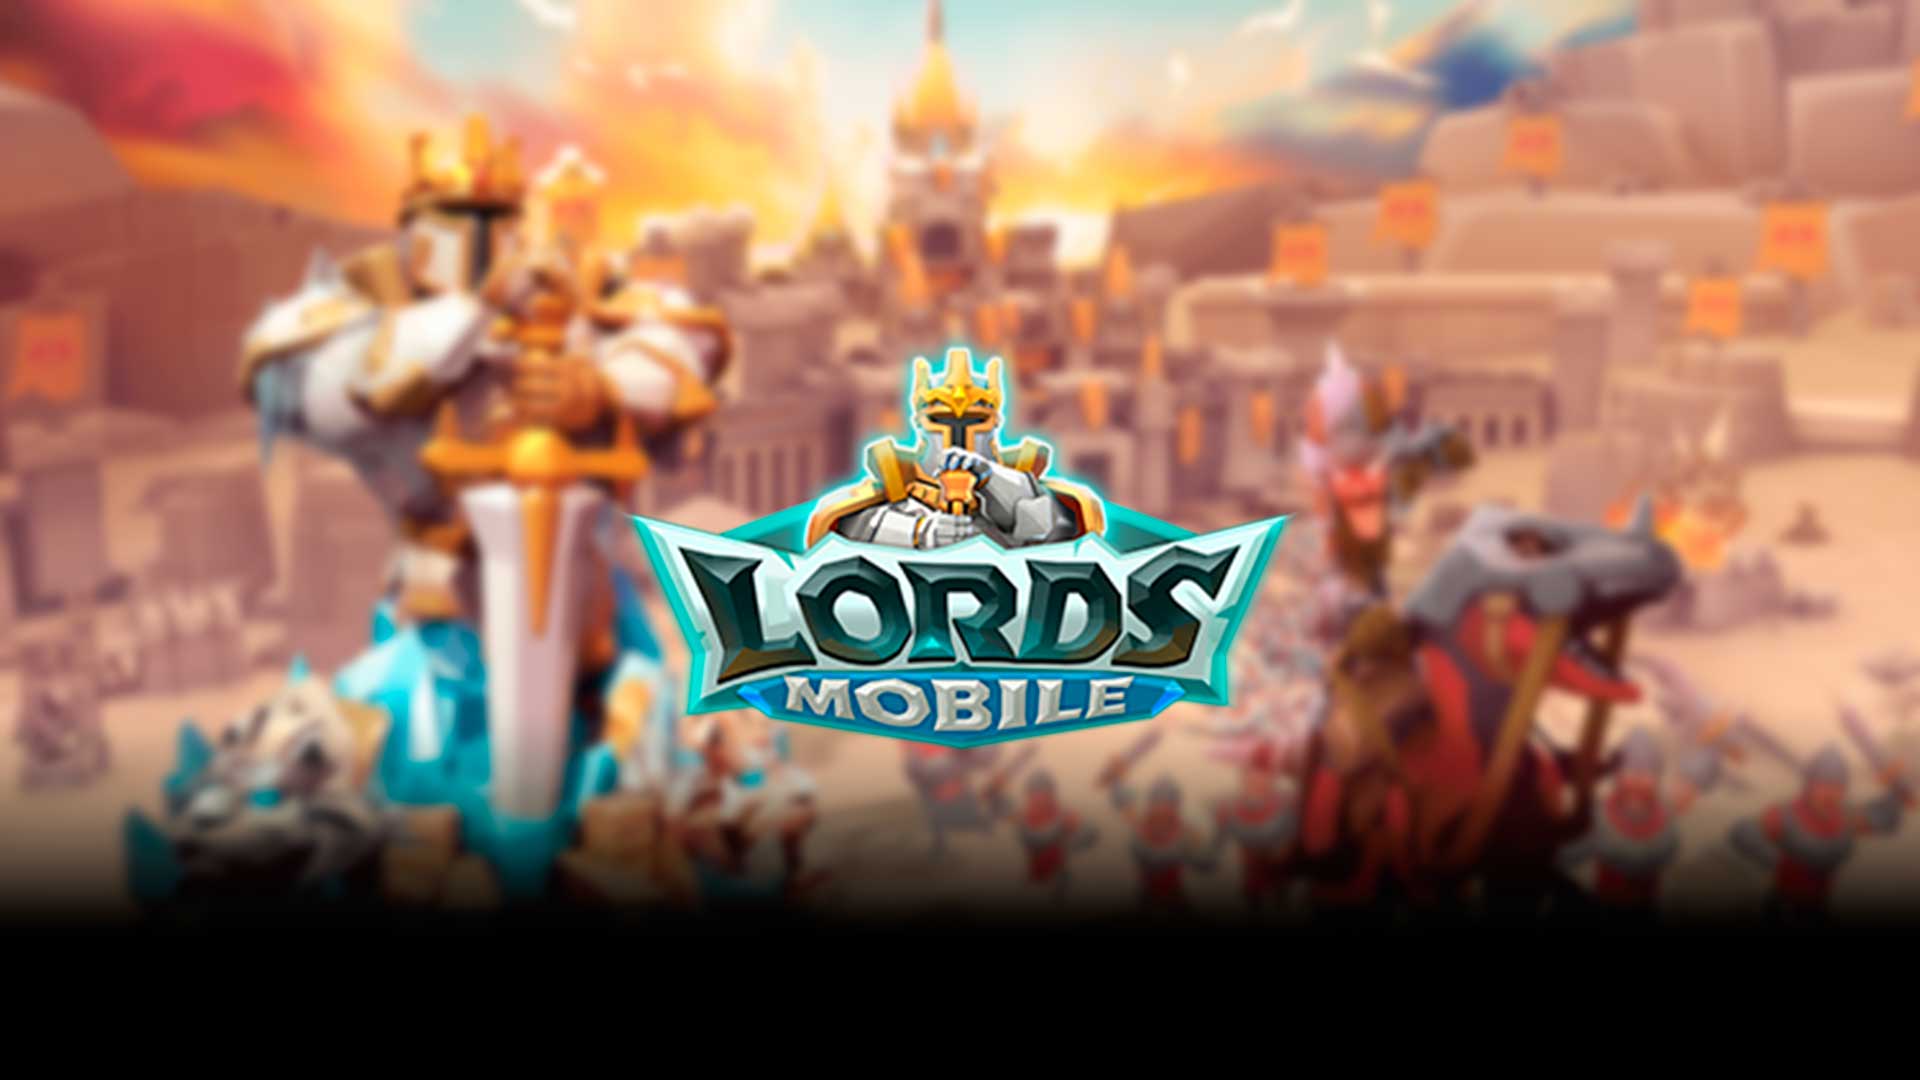 Lords Mobile - 3.633 Diamantes